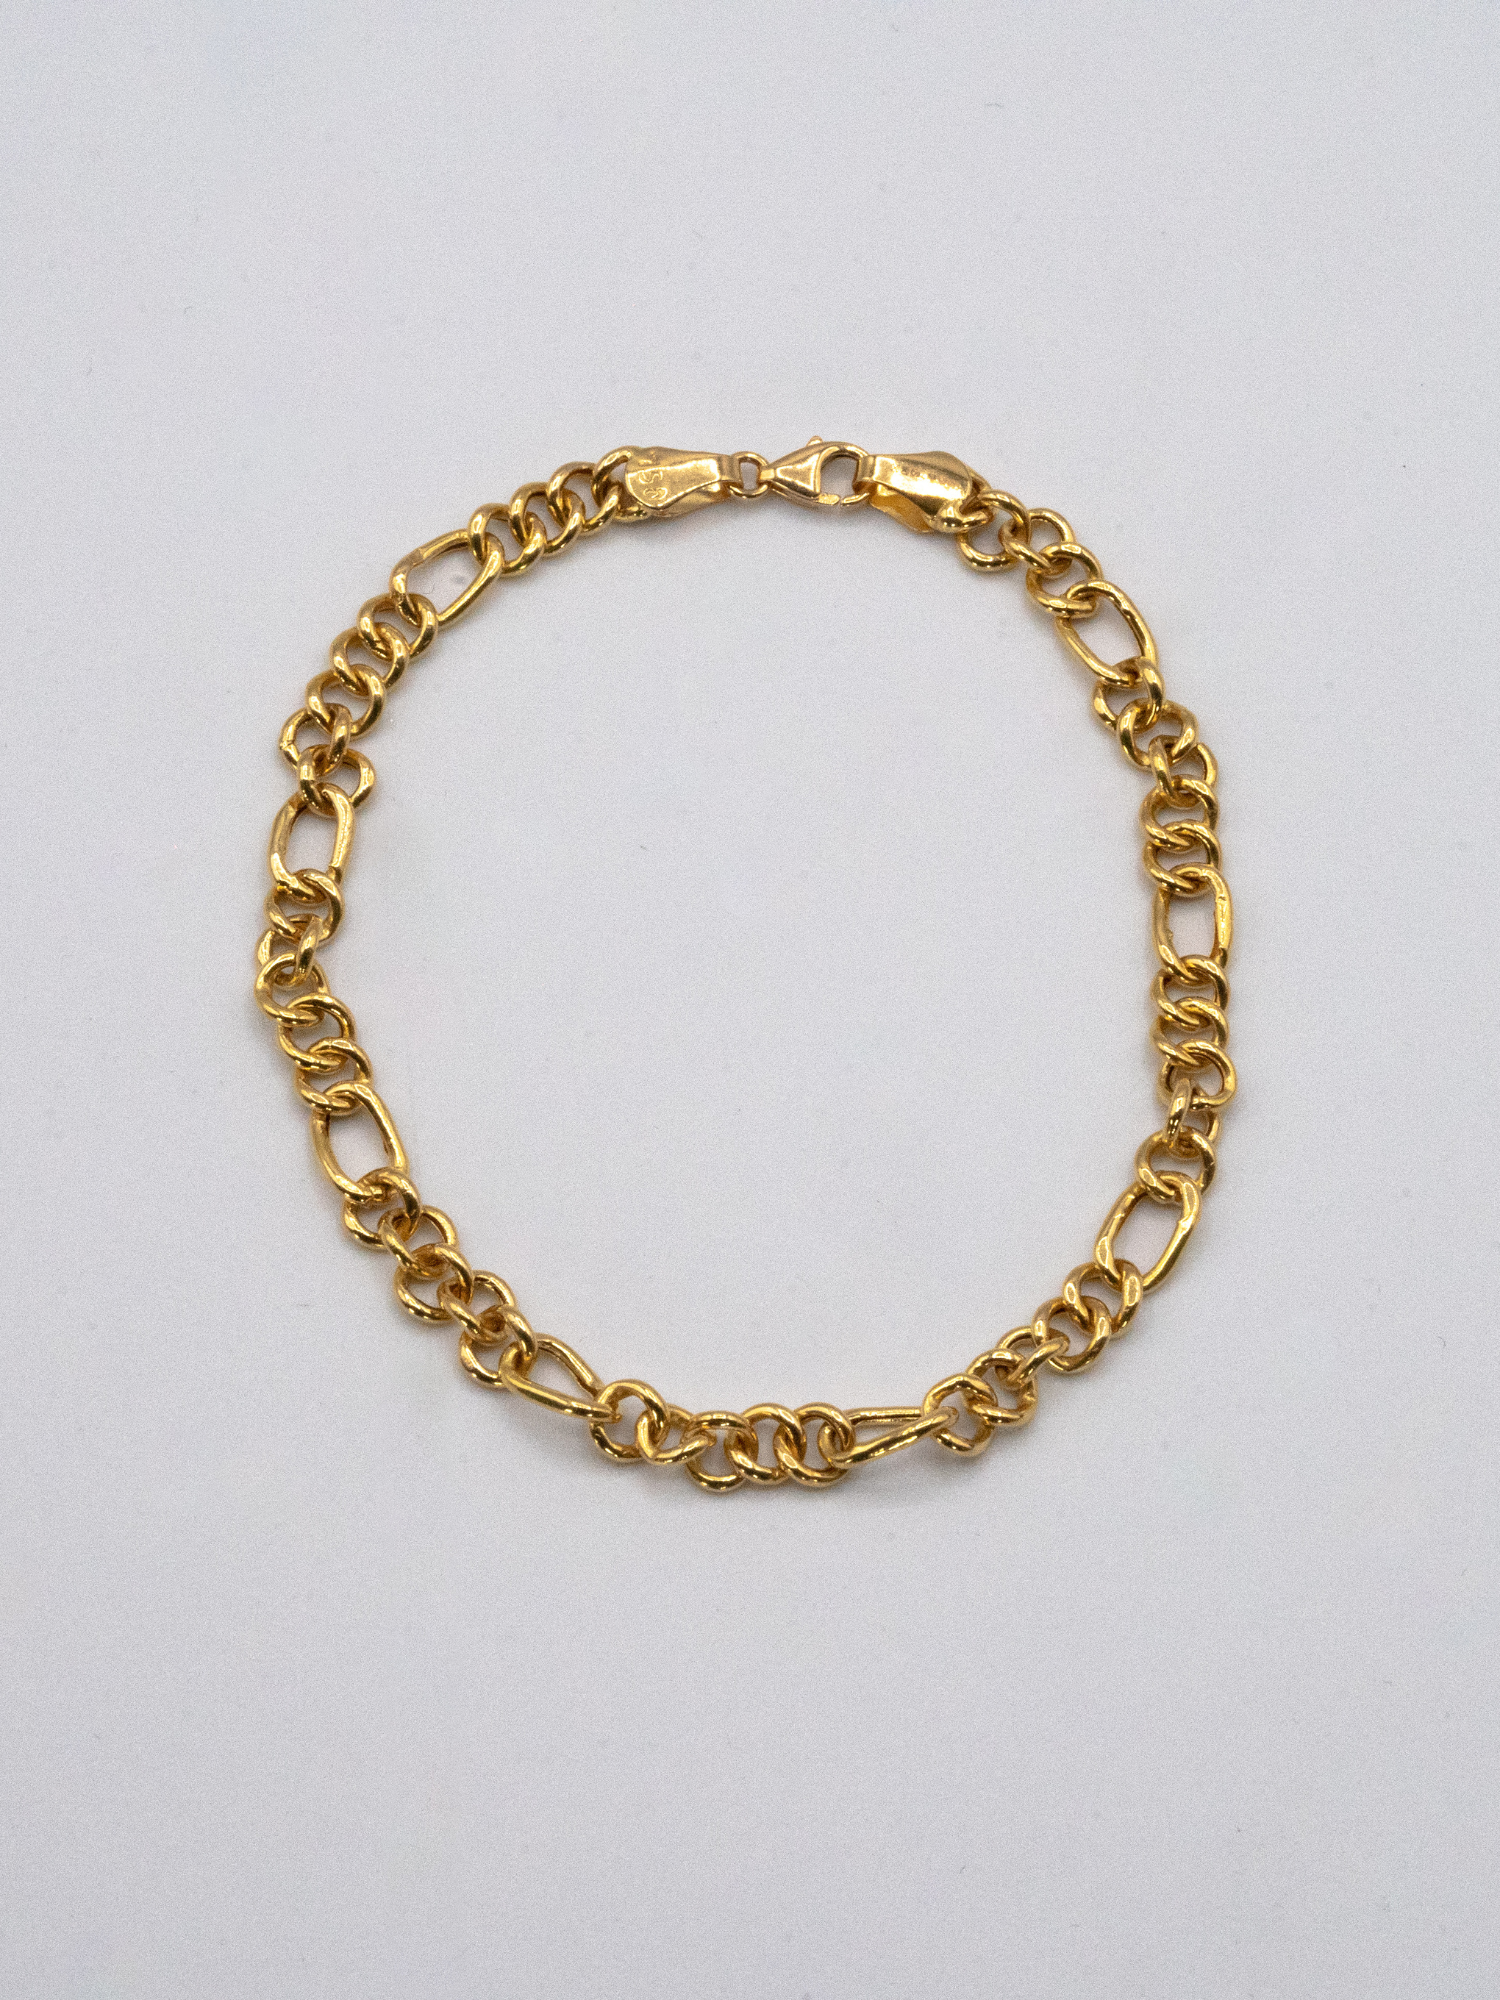 WOMEN'S 18 KARAT YELLOW GOLD LINK CHAIN BRACELET - 7 inch Yellow Gold 18 Karat Gold